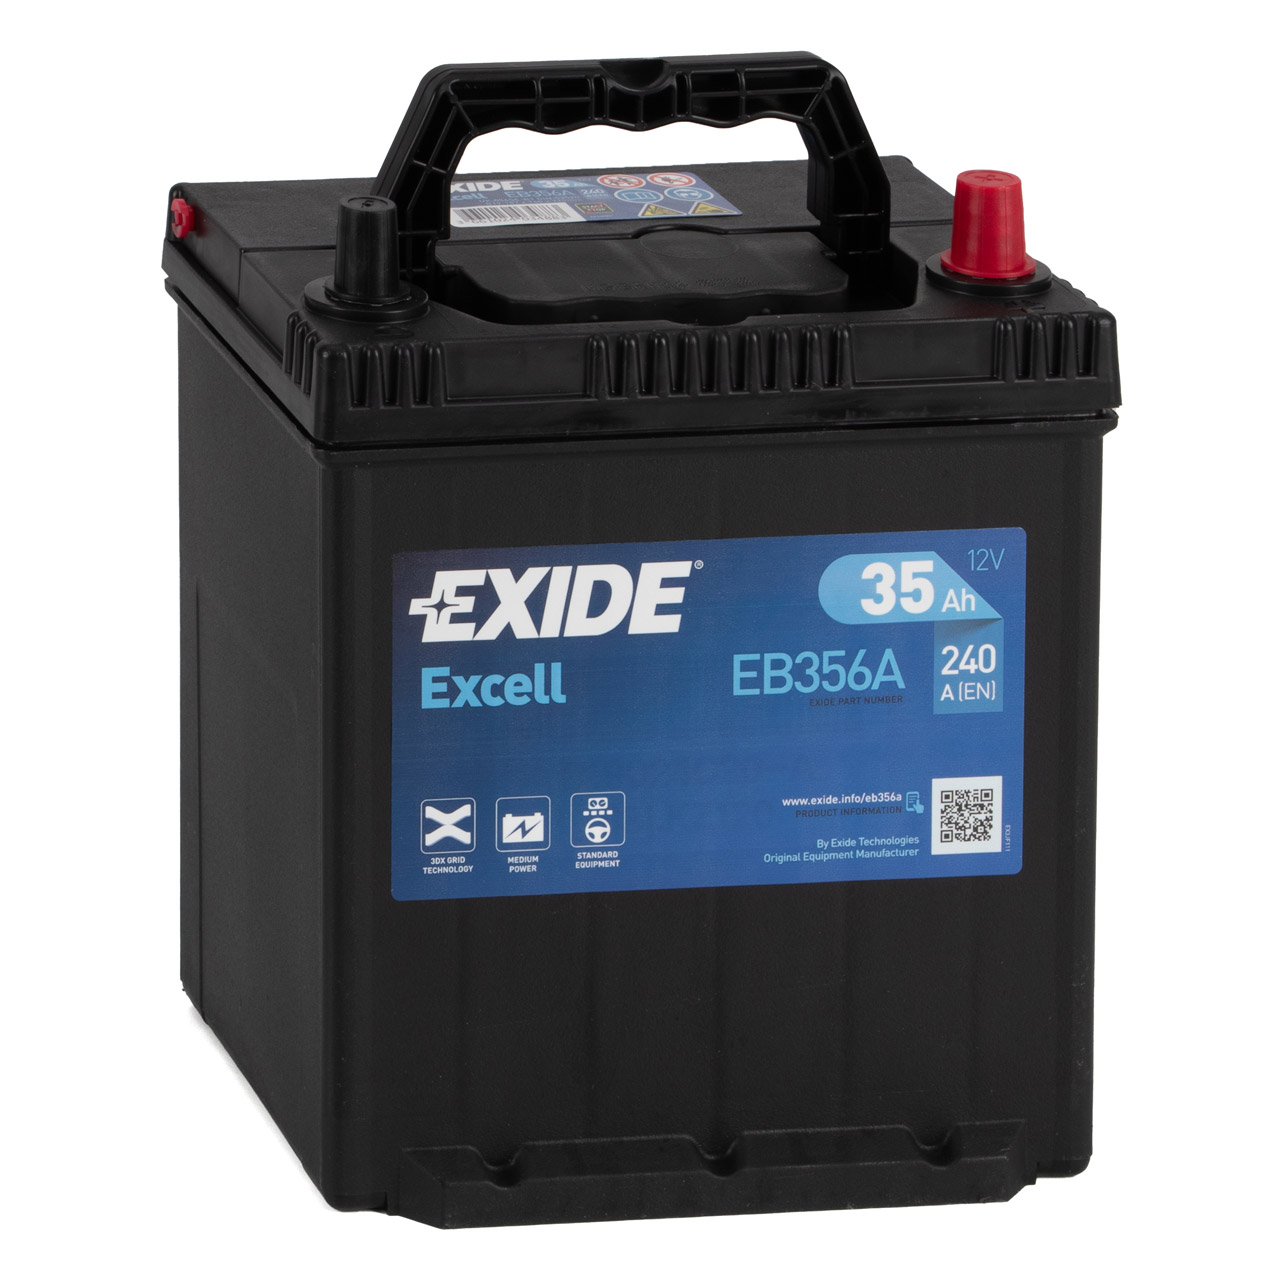 EXIDE EB356A EXCELL Autobatterie Batterie Starterbatterie 12V 35Ah EN240A